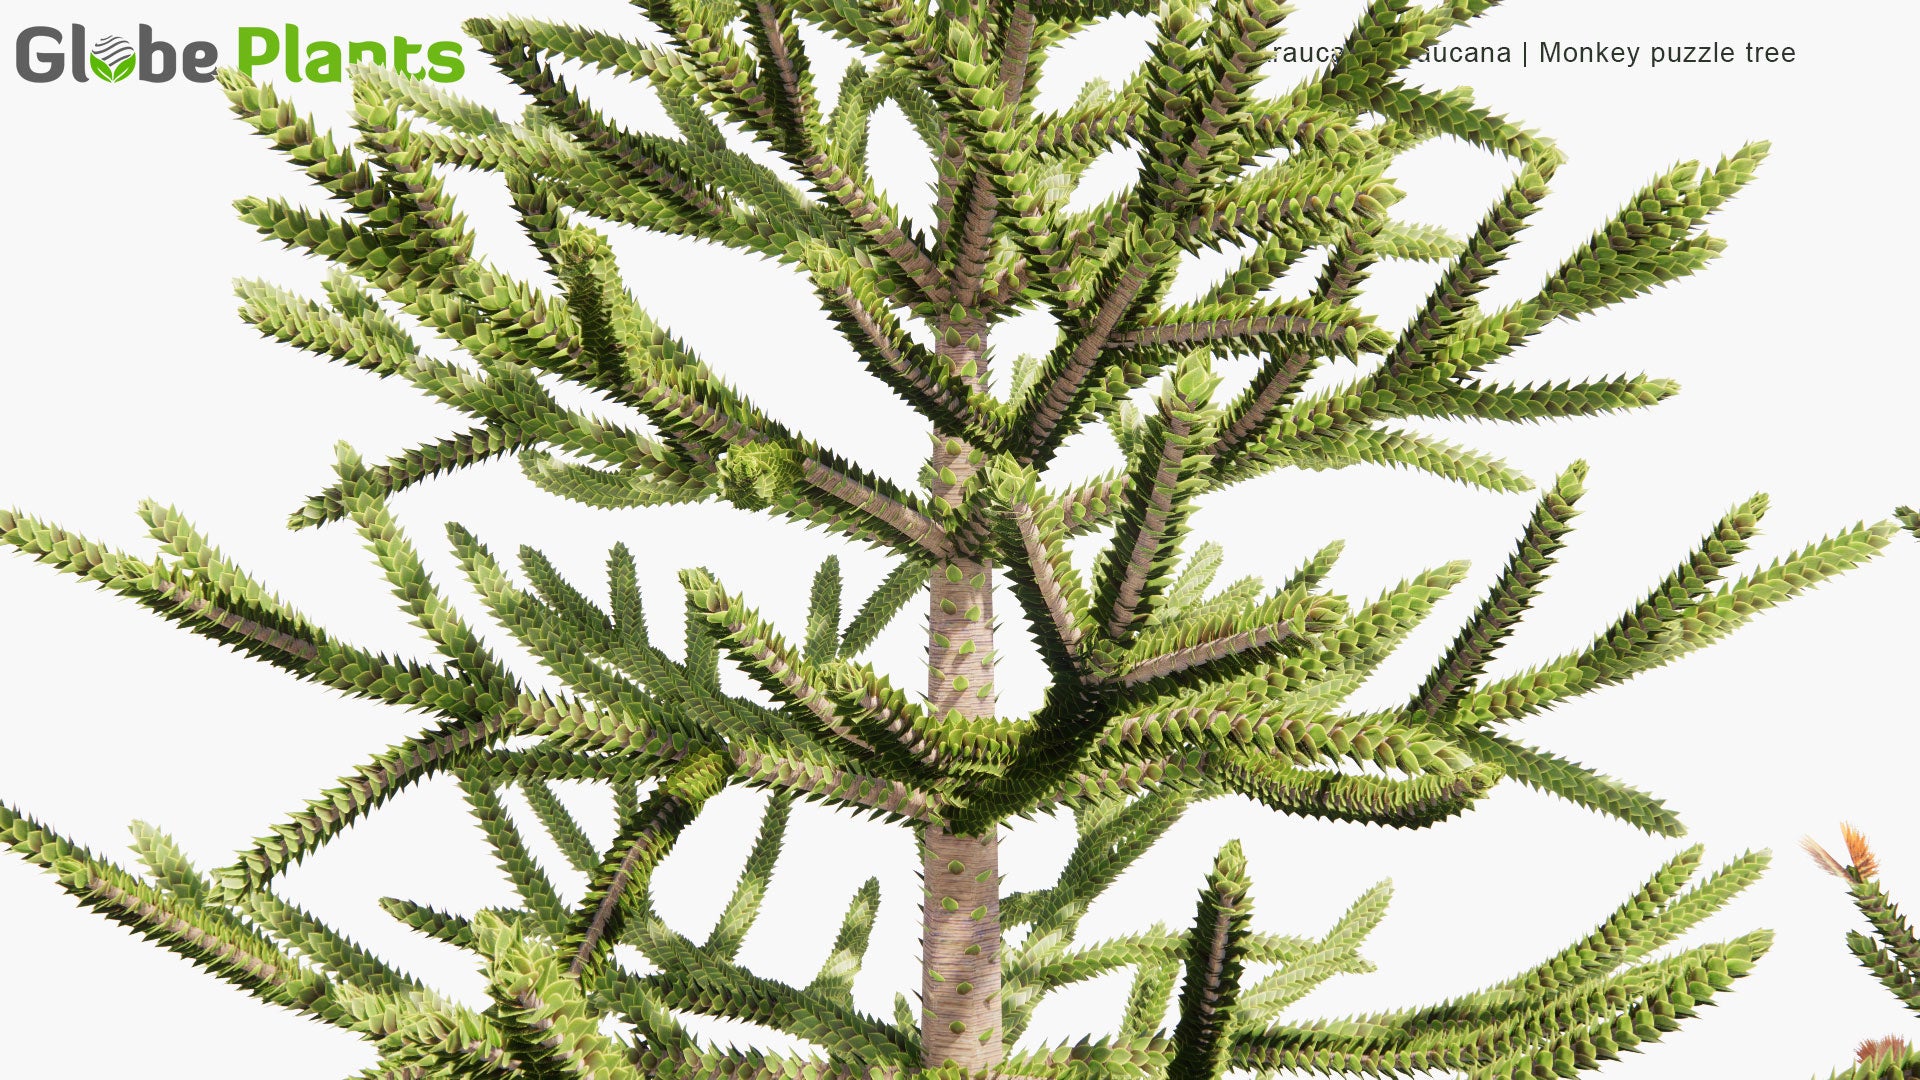 Low Poly Araucaria Araucana - Monkey Puzzle Tree, Monkey Tail Tree, Piñonero, Pewen, Chilean Pine (3D Model)